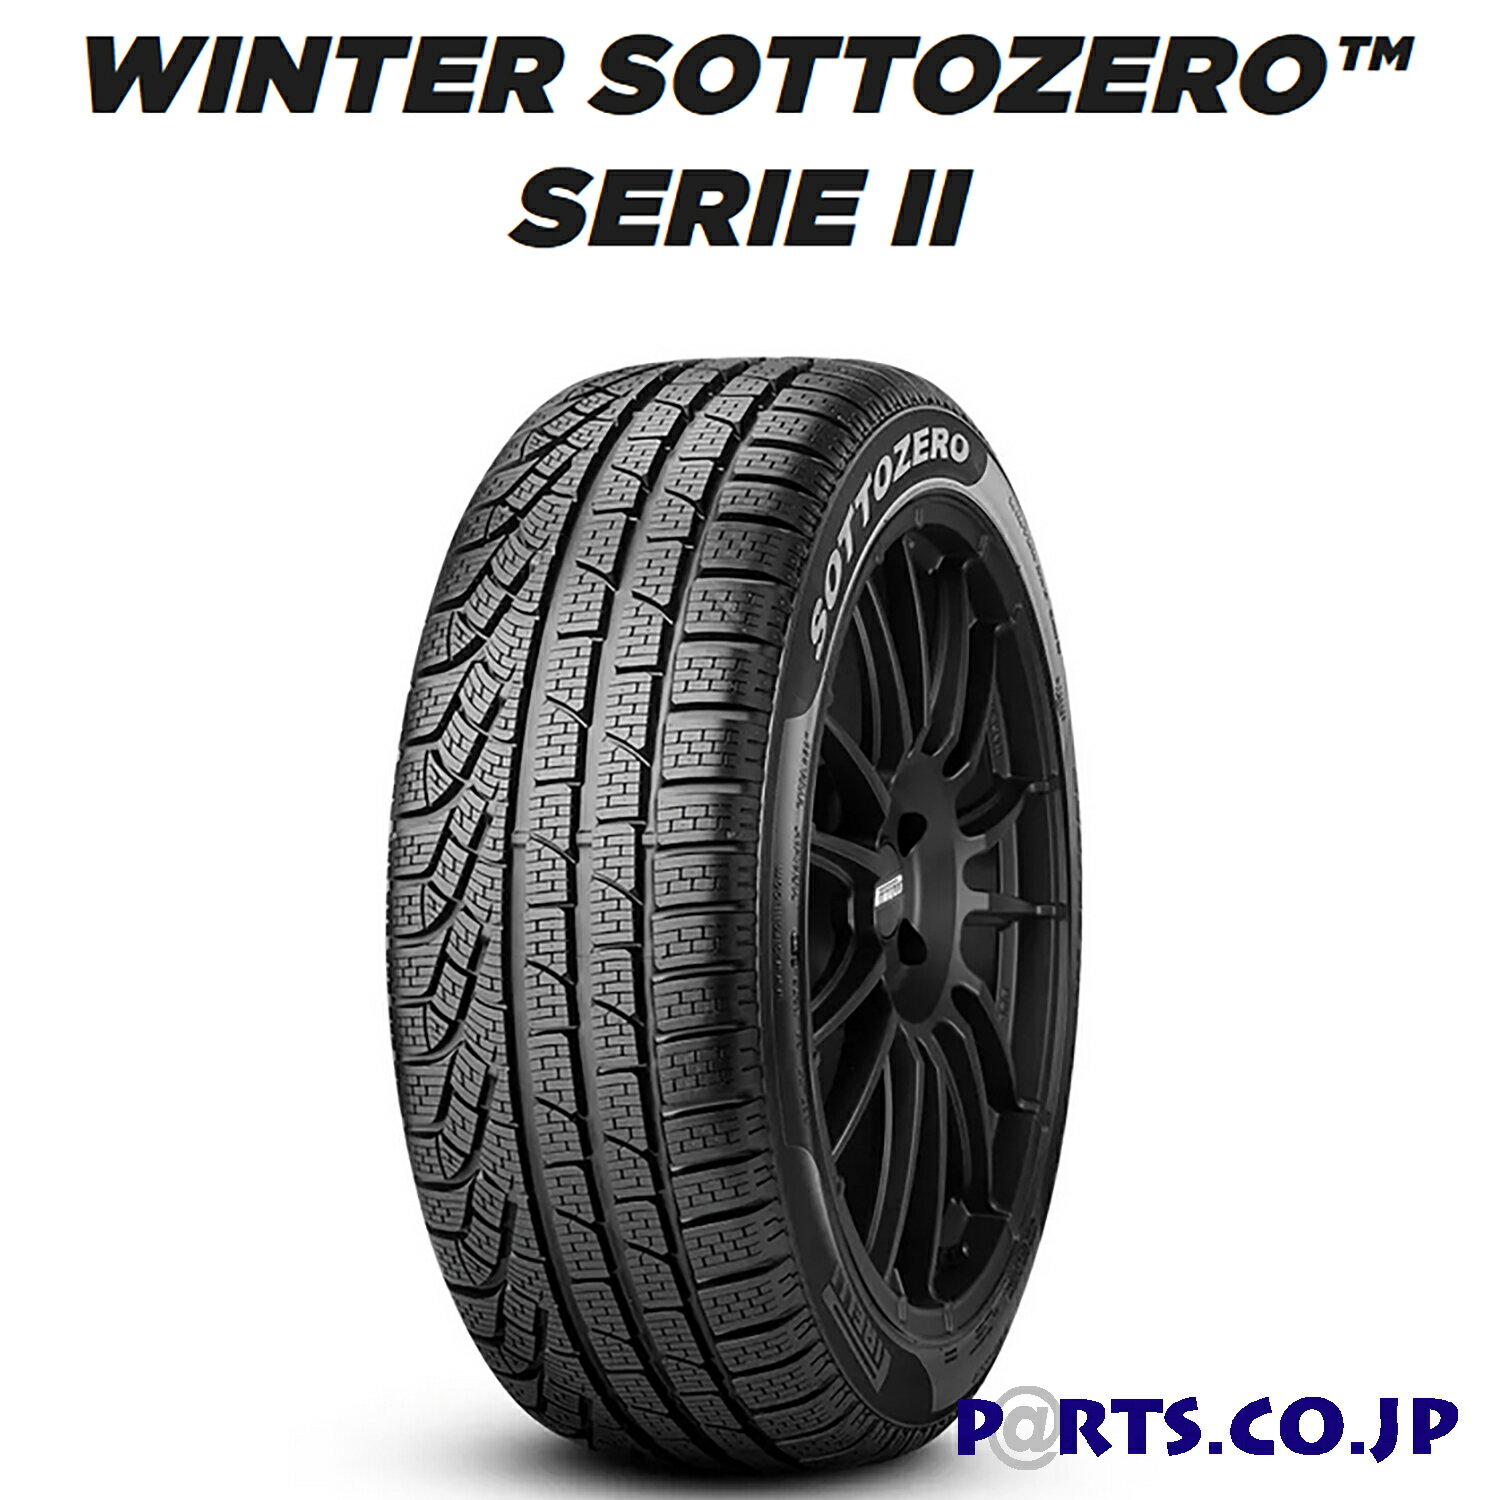 WINTER 240 SOTTOZERO II 235/45R18 94V (N0)